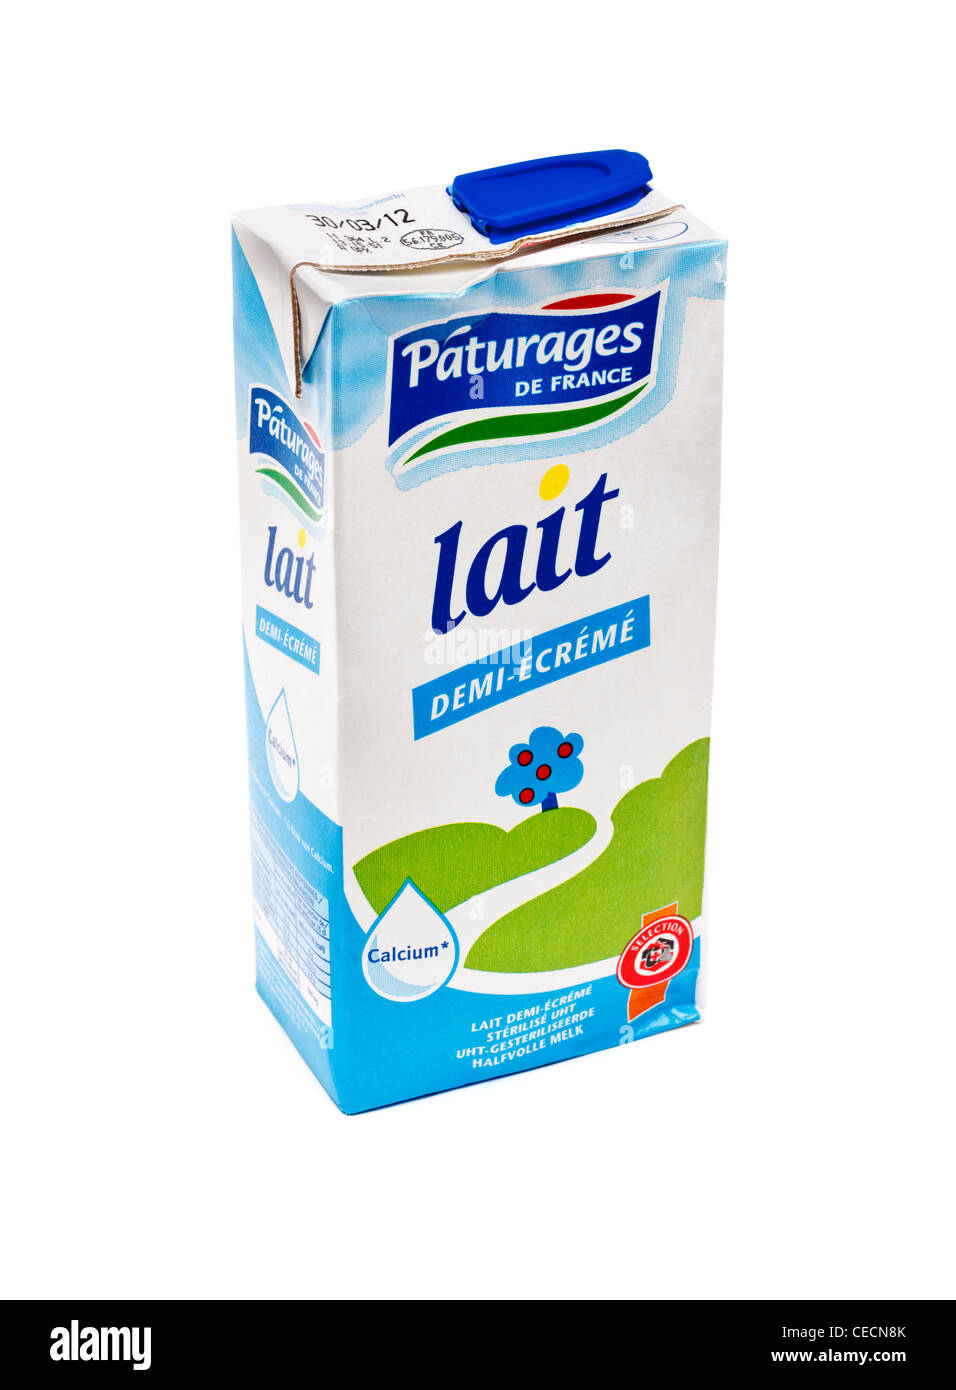 French pasteurised milk carton - half cream - on white background Stock Photo